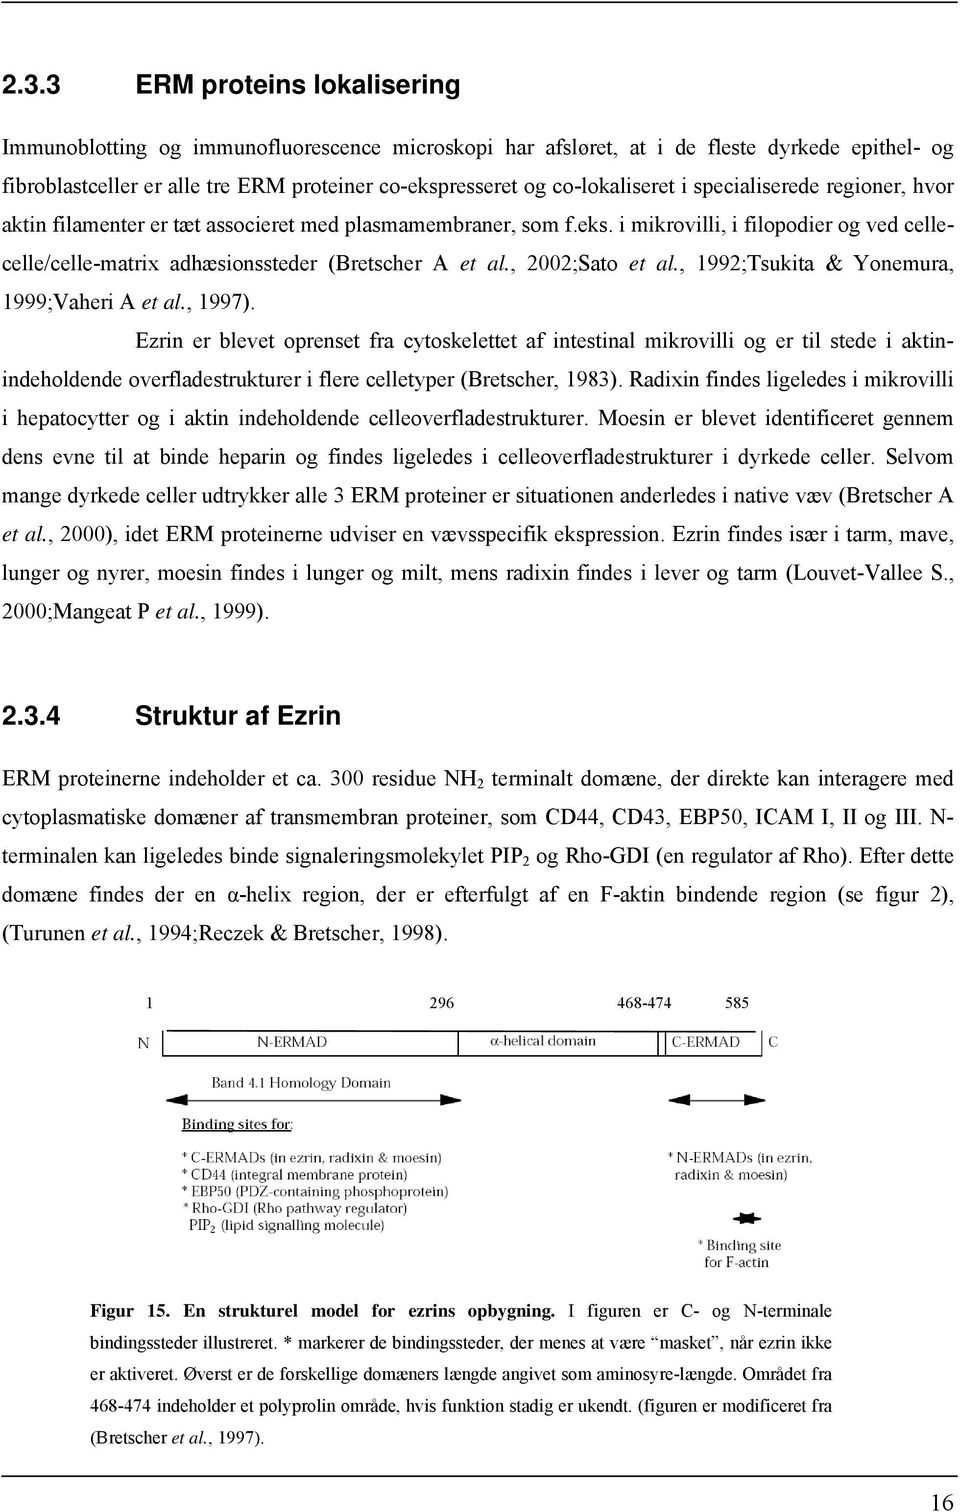 i mikrovilli, i filopodier og ved cellecelle/celle-matrix adhæsionssteder (Bretscher A et al., 2002;Sato et al., 1992;Tsukita & Yonemura, 1999;Vaheri A et al., 1997).